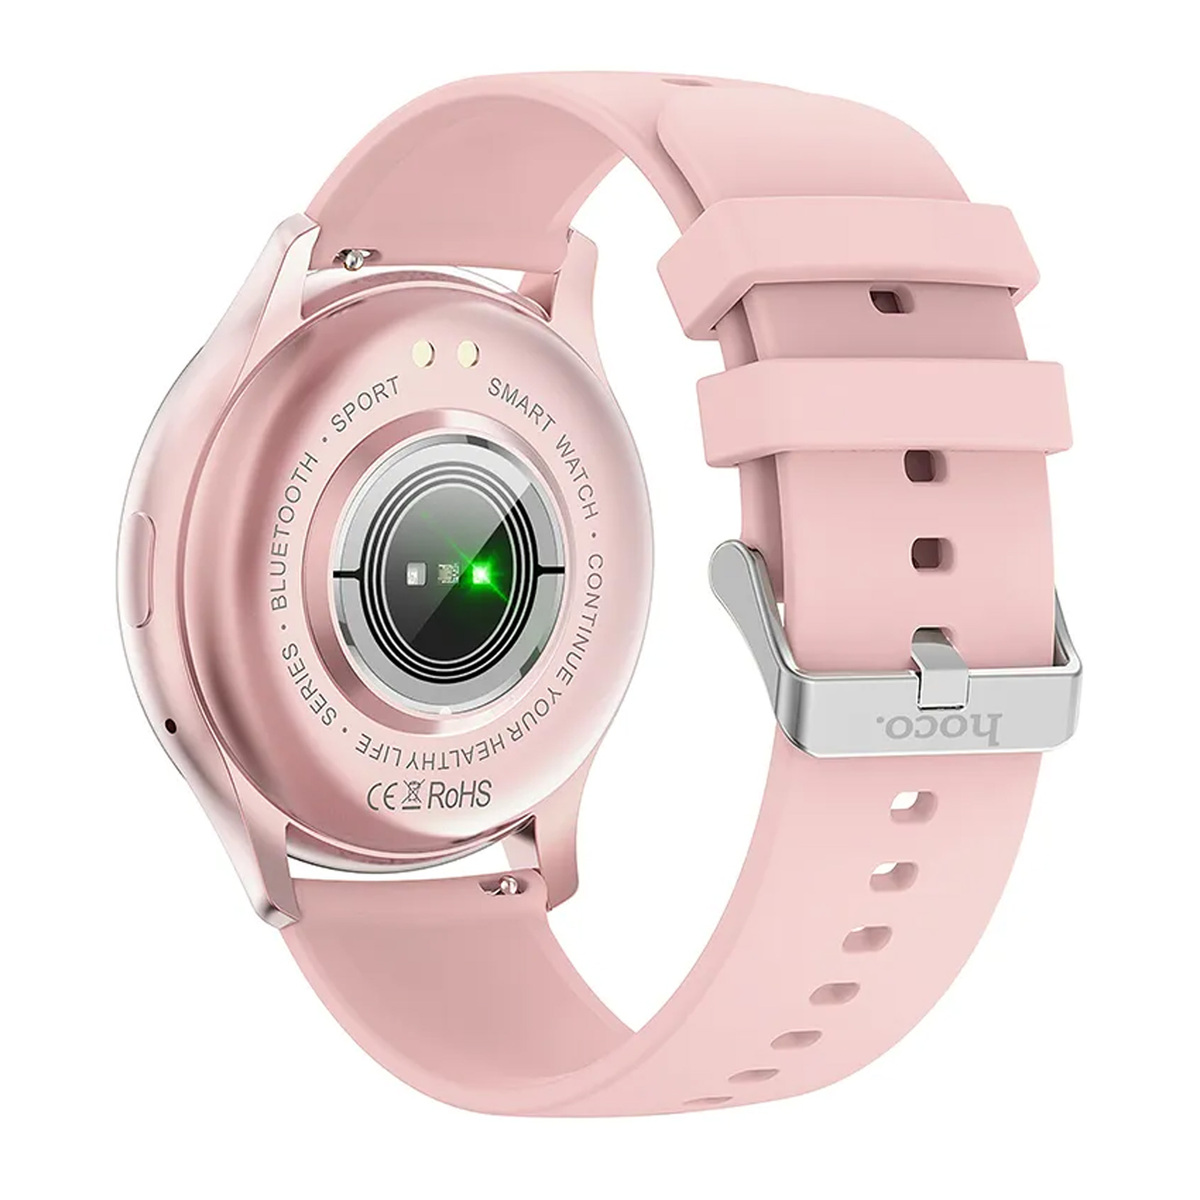 Hoco Y15 Bluetooth Calling Smart Watch, 1.43 inch, Silver